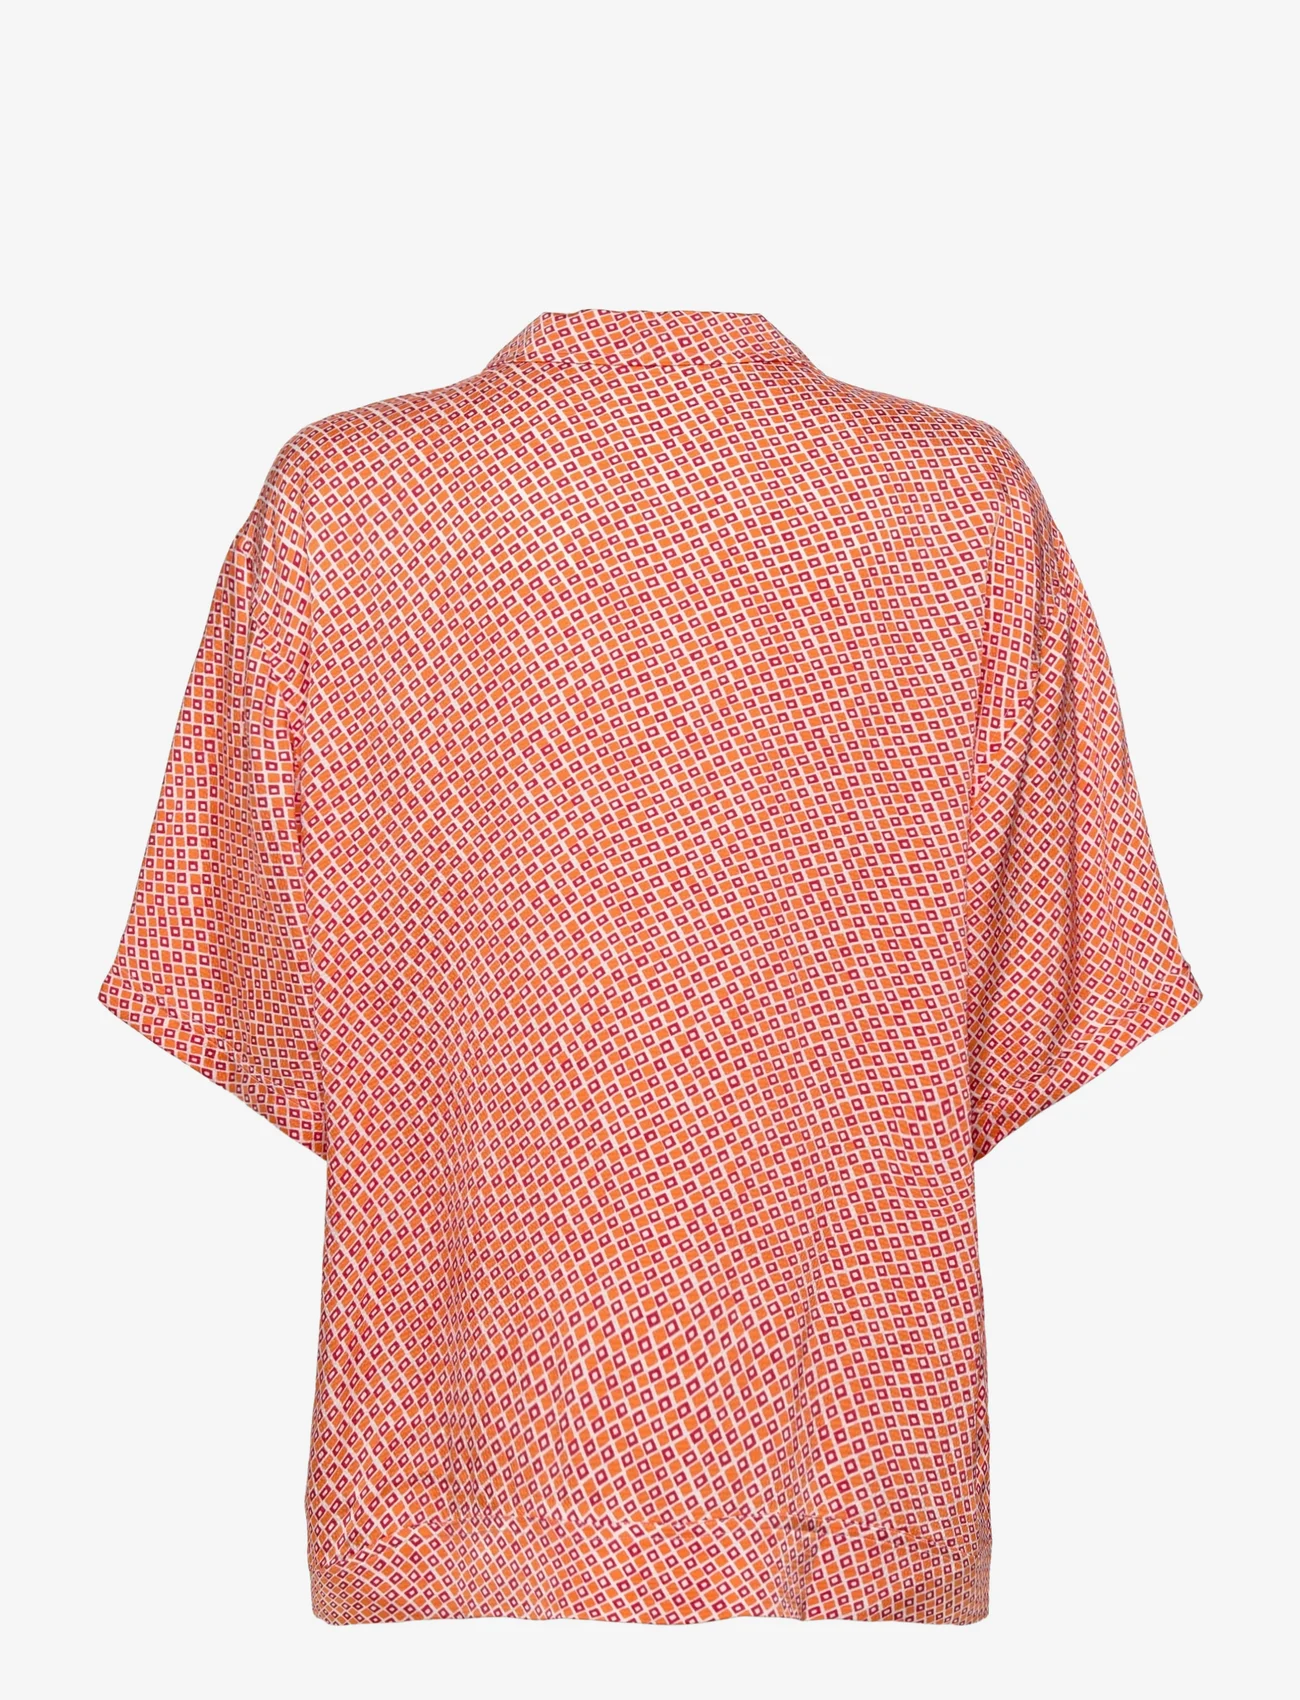 American Vintage - GINTOWN - kurzärmlige hemden - phoebe - 1